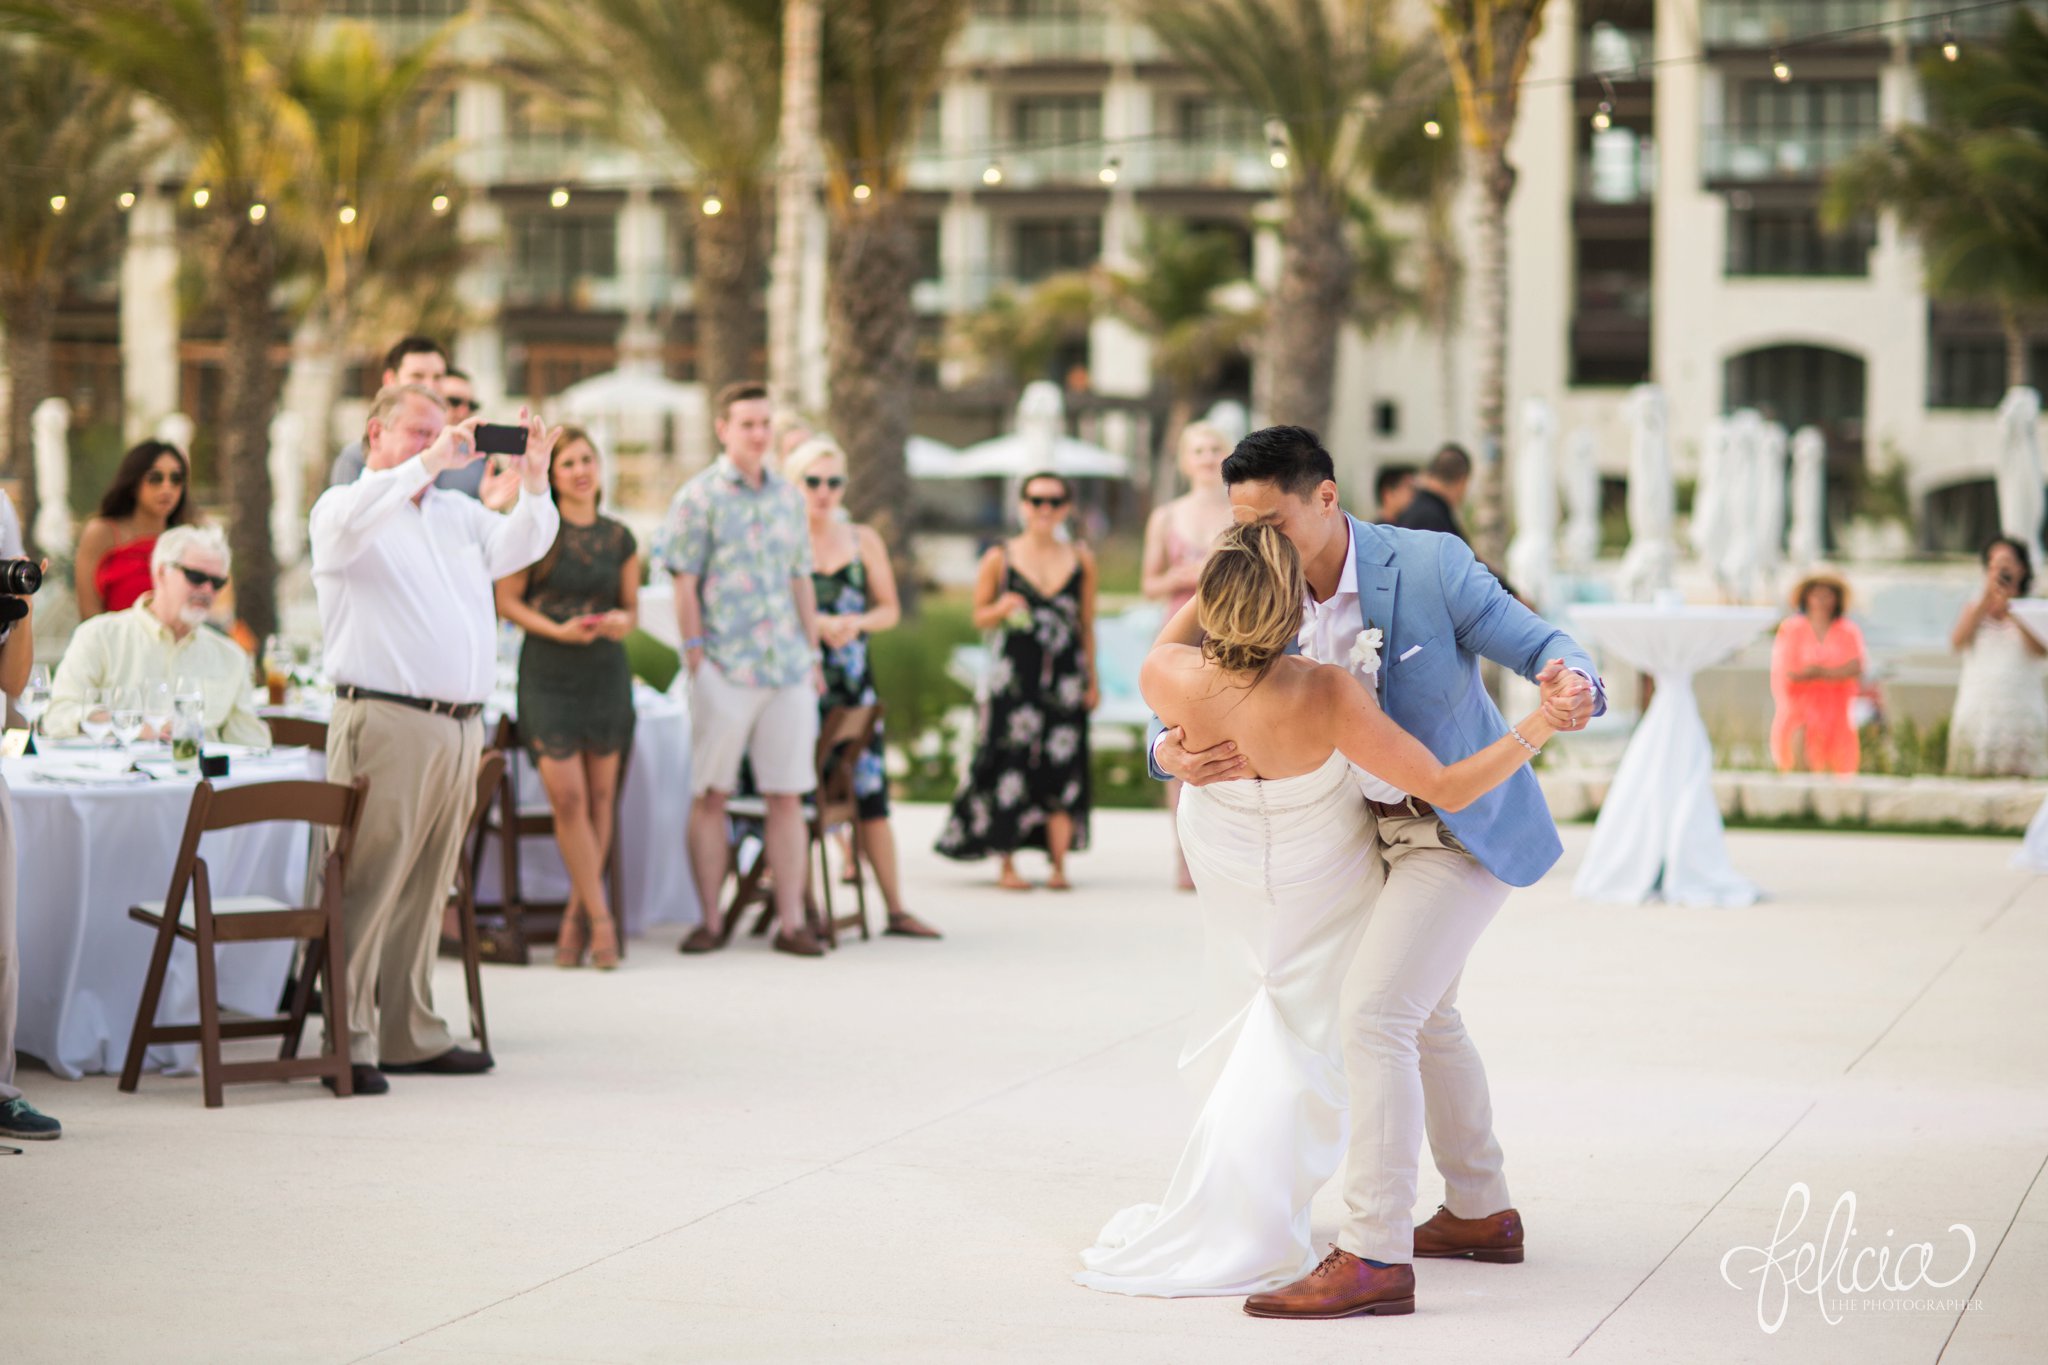 images by feliciathephotographer.com | Destination Beach Wedding | Unicco 20 87 | Photographer | L&S Travel | reception | first dance | groovy | chic | palm trees | silly | joyful | fun | chic | celebration | party | dip | twirl | romantic lights 